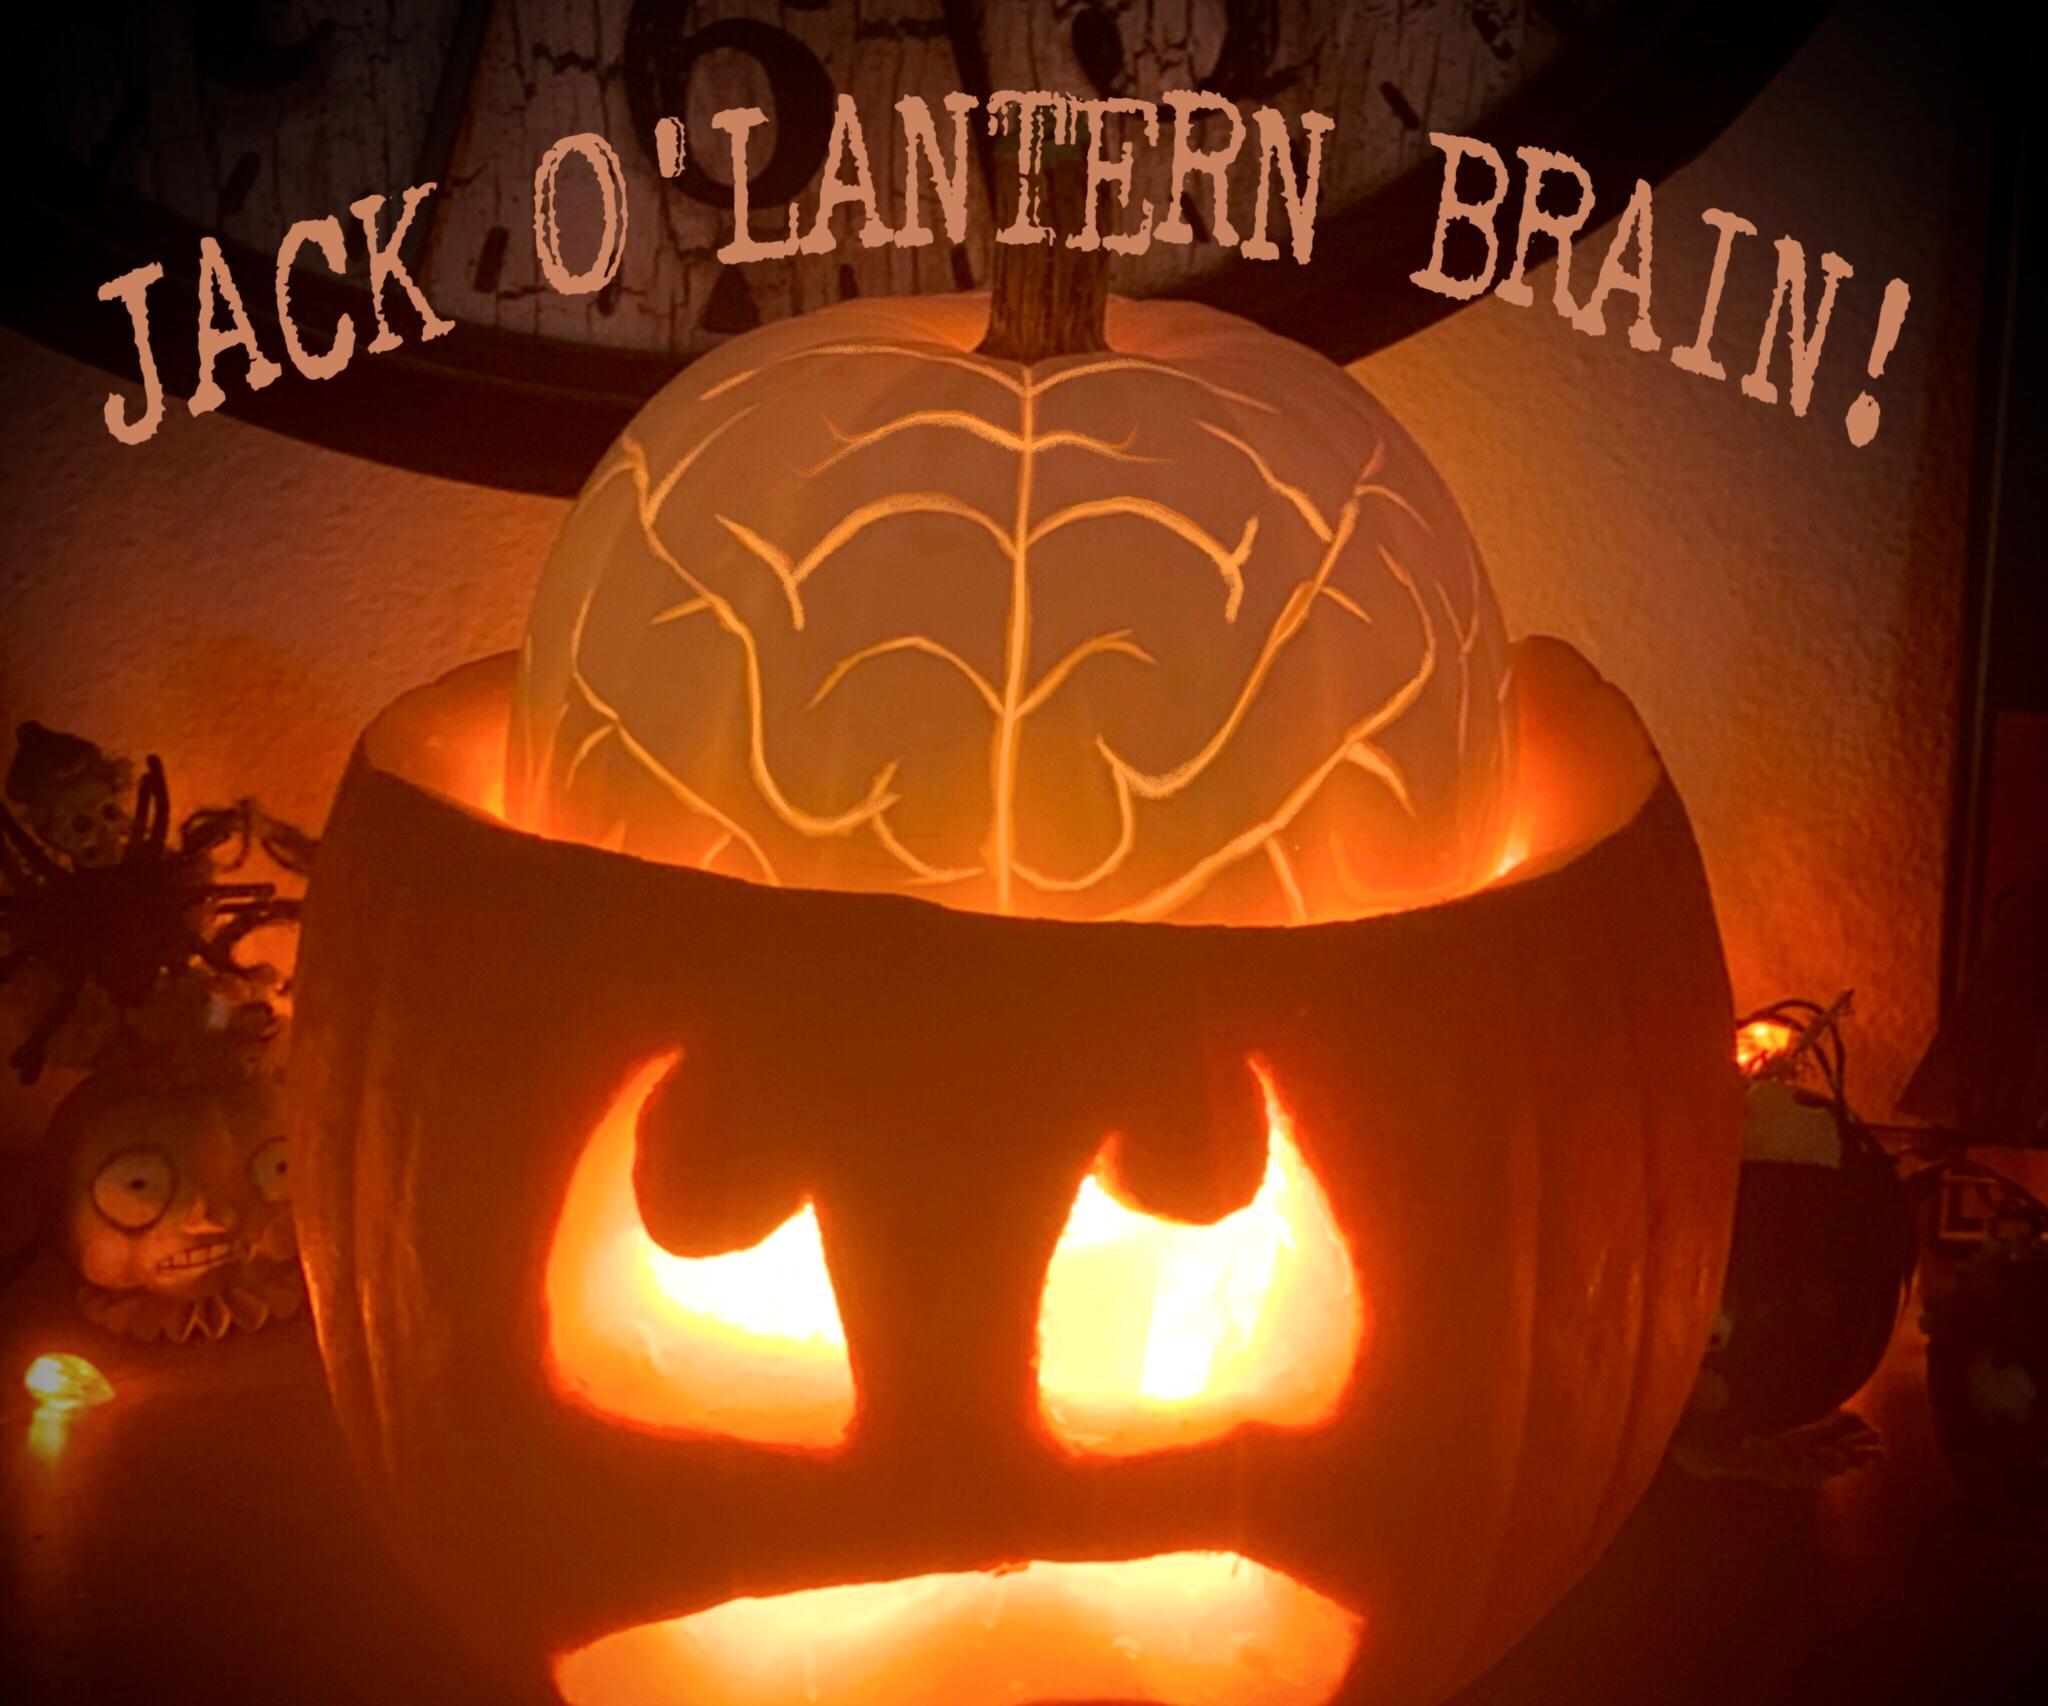 Jack O' Lantern Brain!